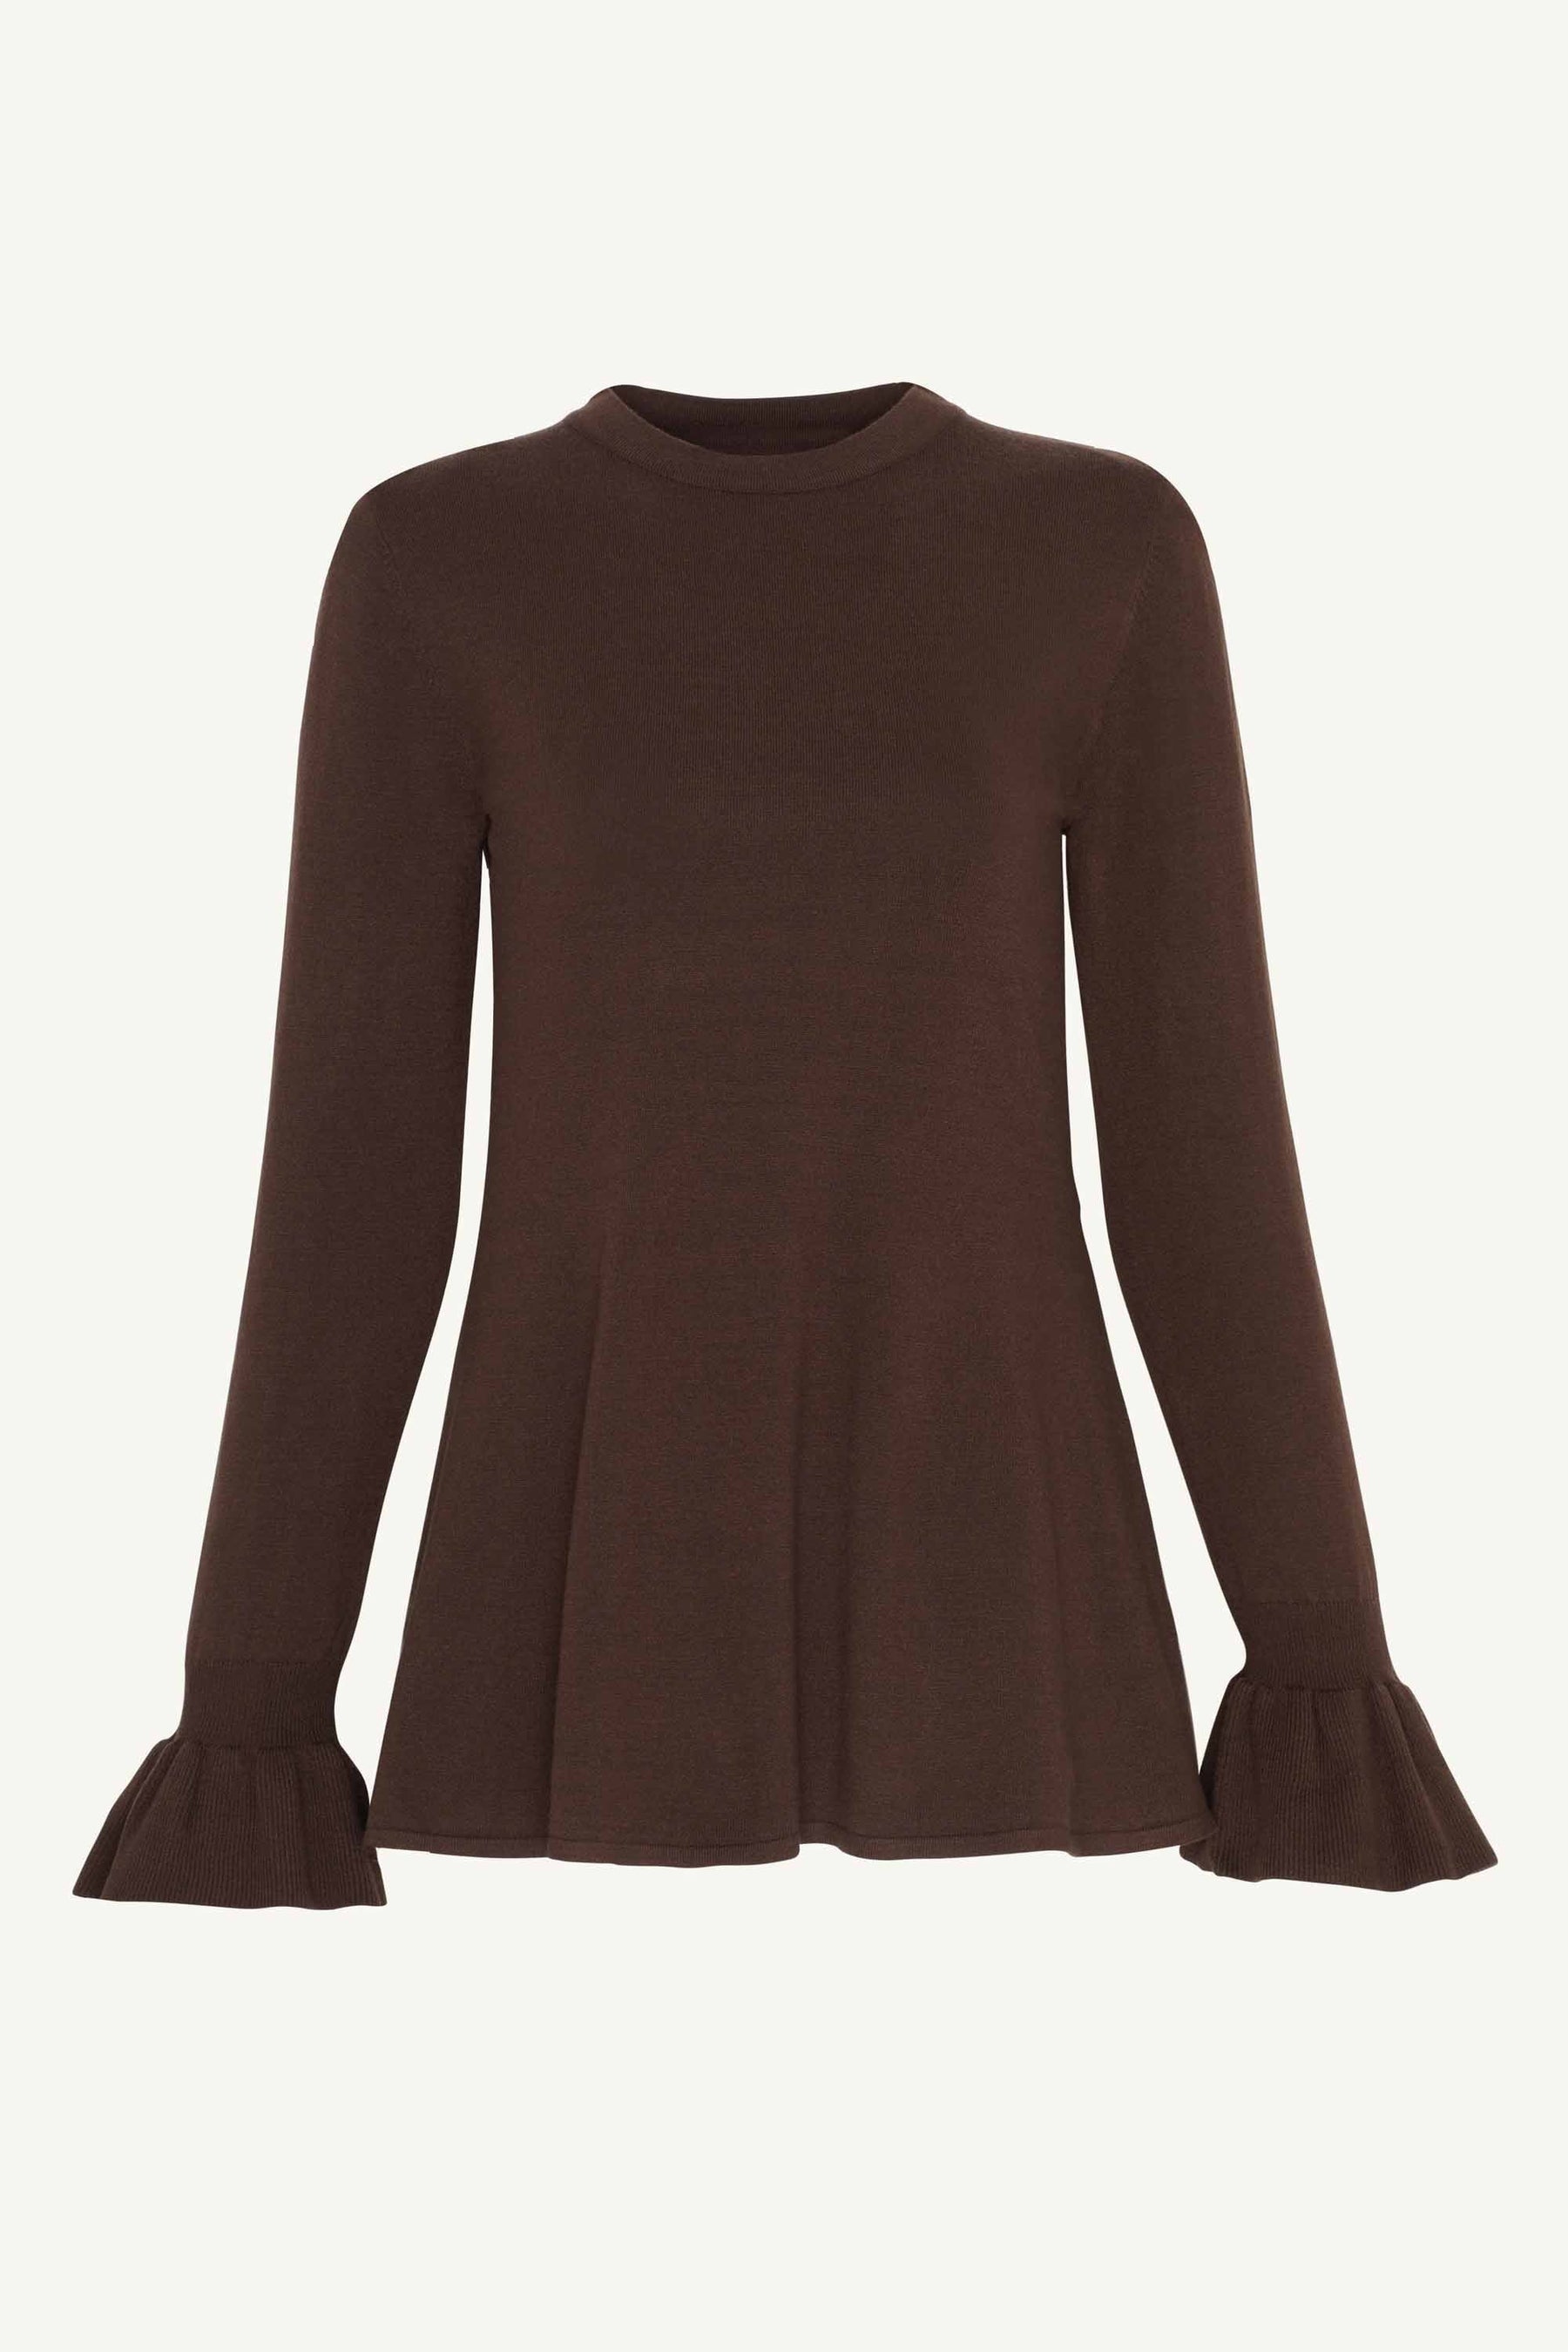 Alara Peplum Knit Top - Chocolate Brown Clothing Veiled 